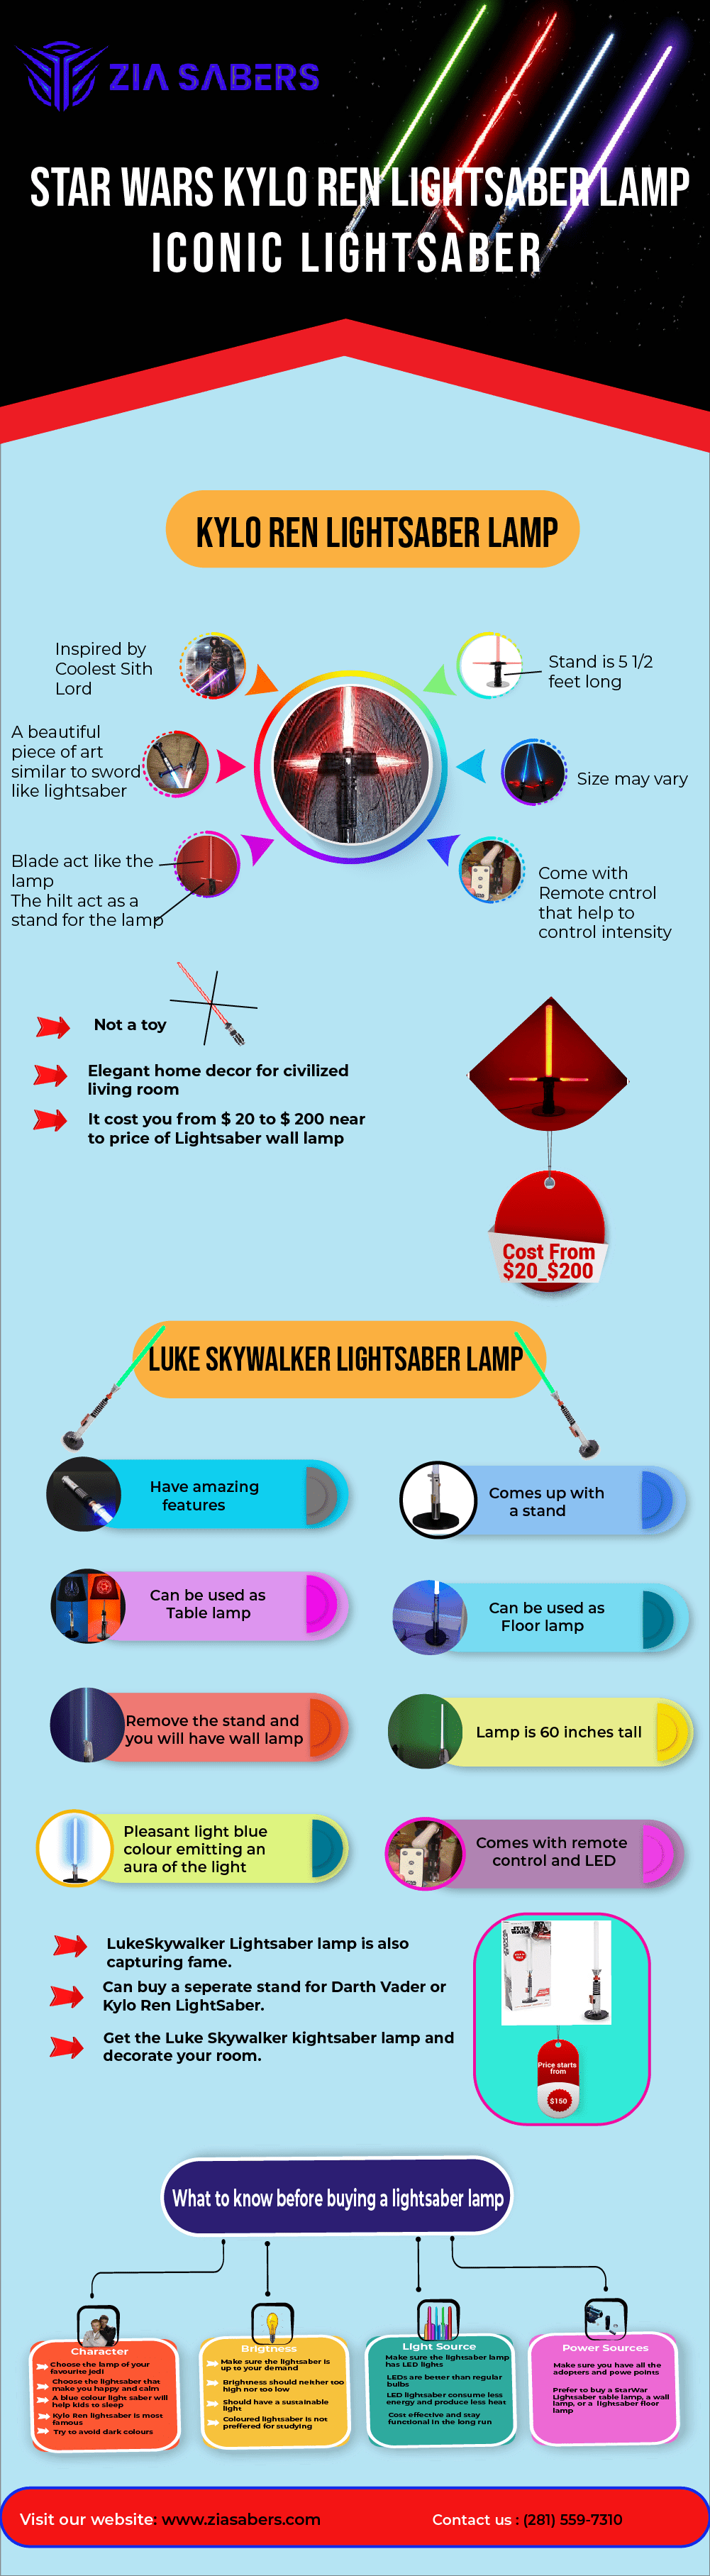 Kylo Ren Lamp Iconic Lightsaber